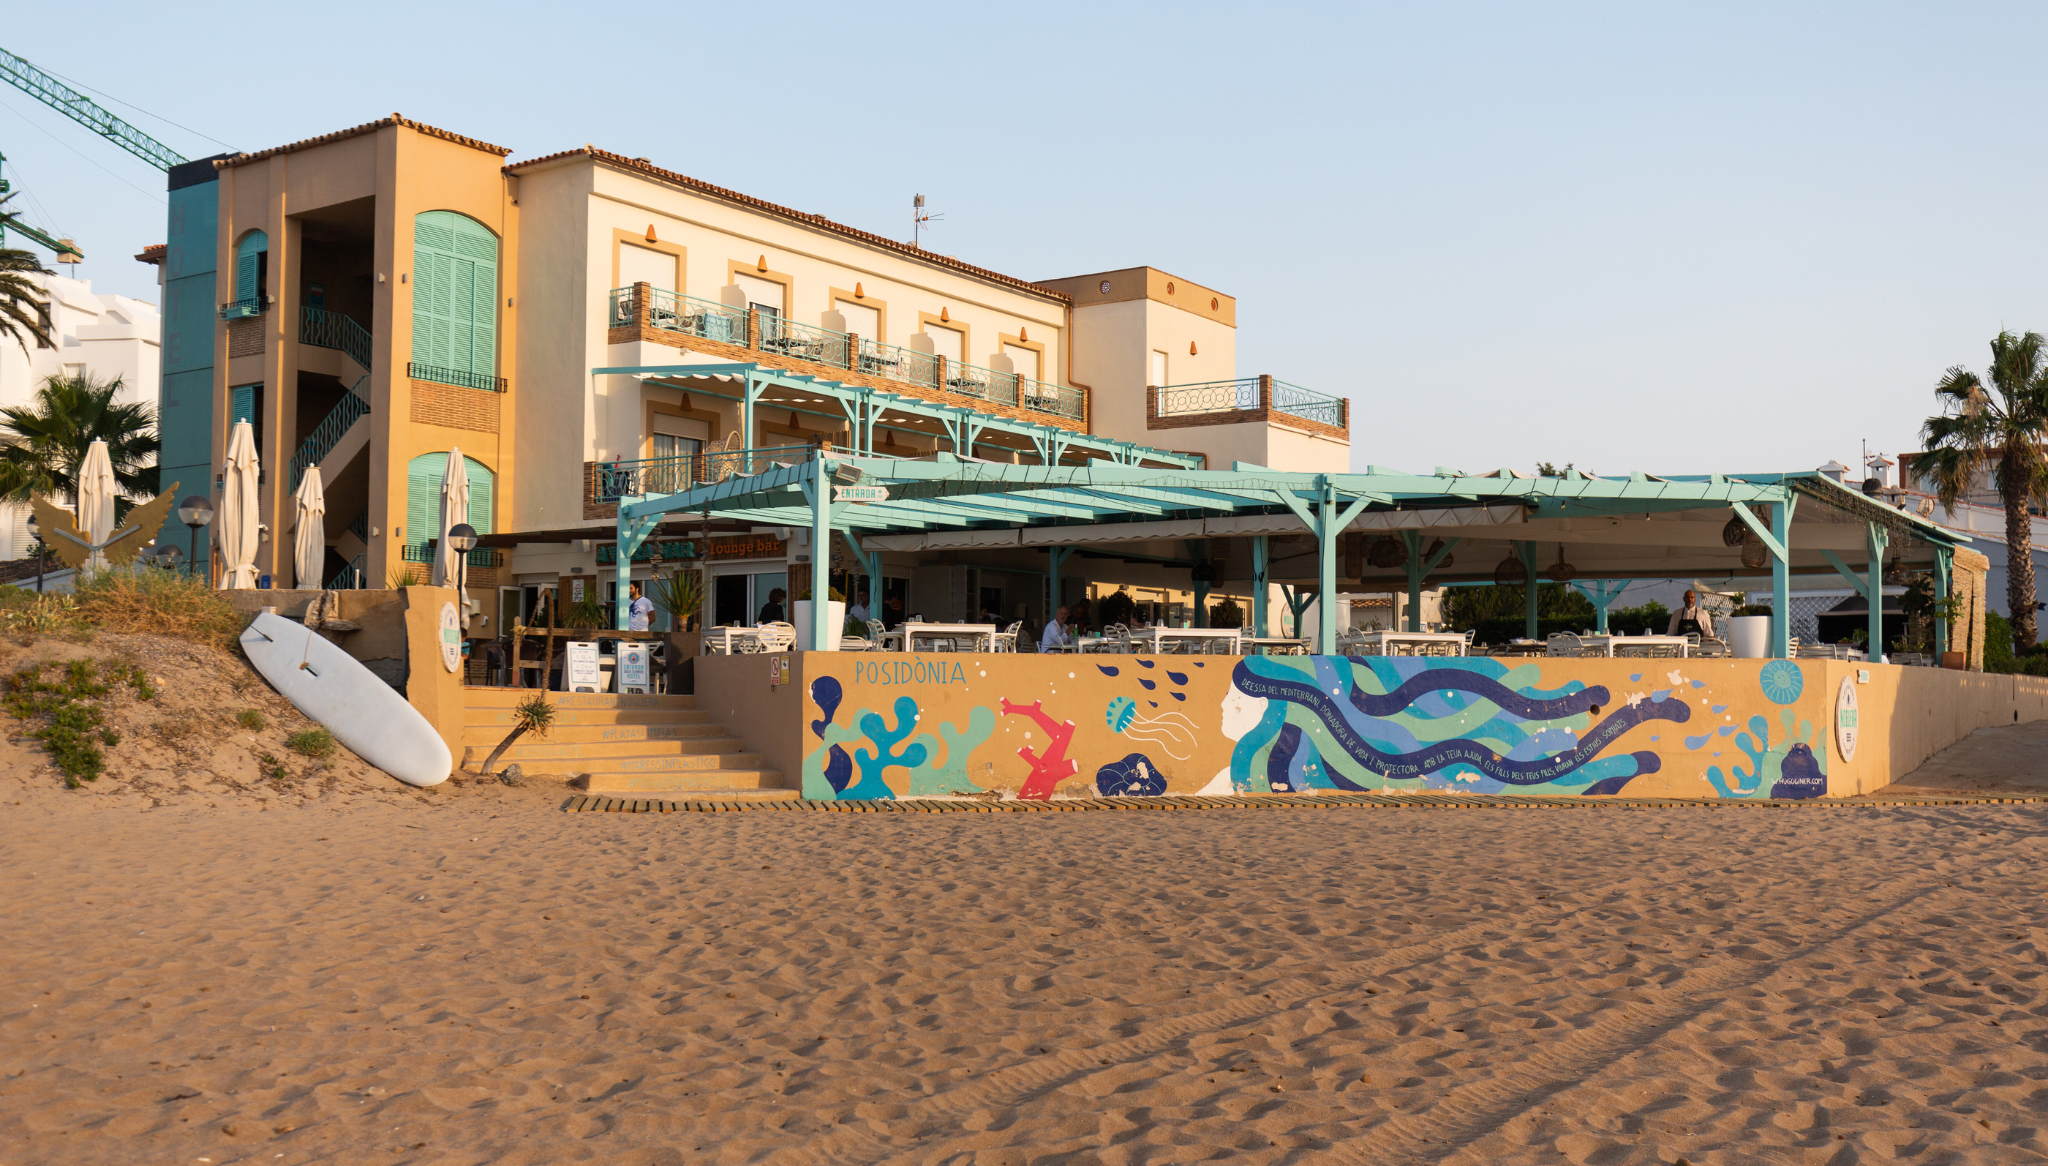 Tu restaurante favorito a pie de playa